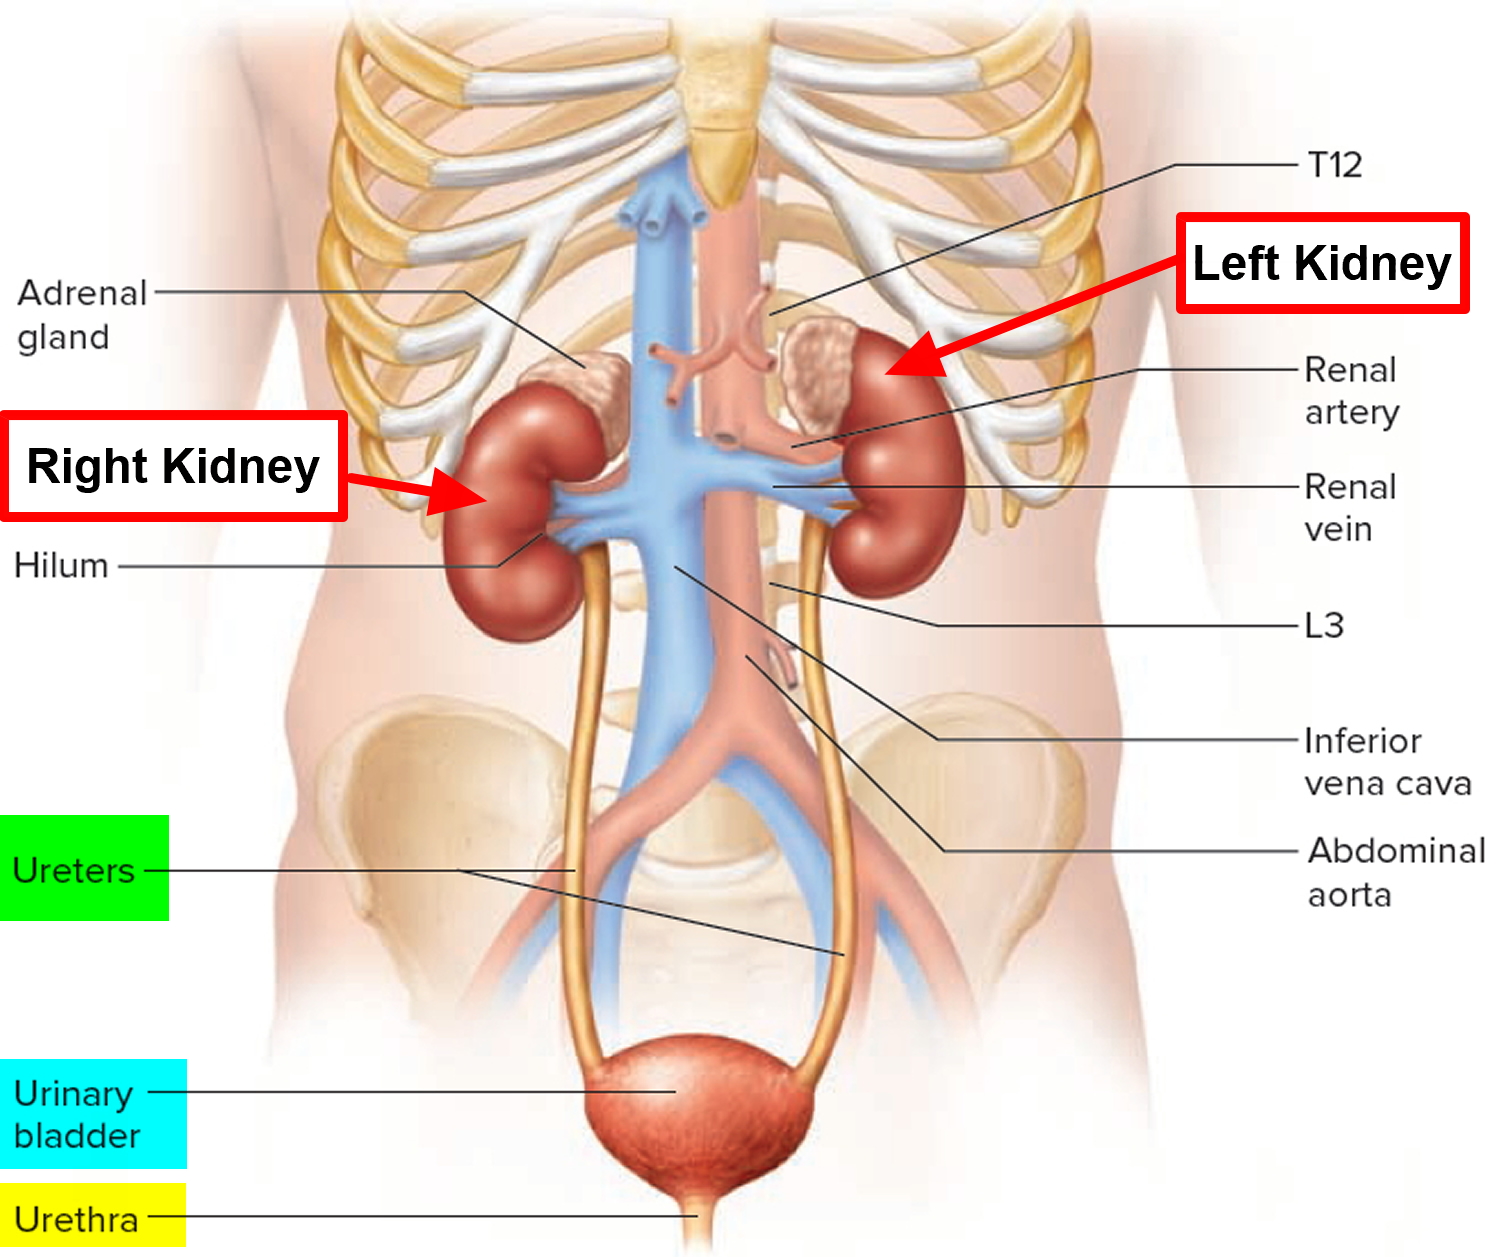 Kidney Pain - Kidney Pain Location - Causes, Symptoms ...